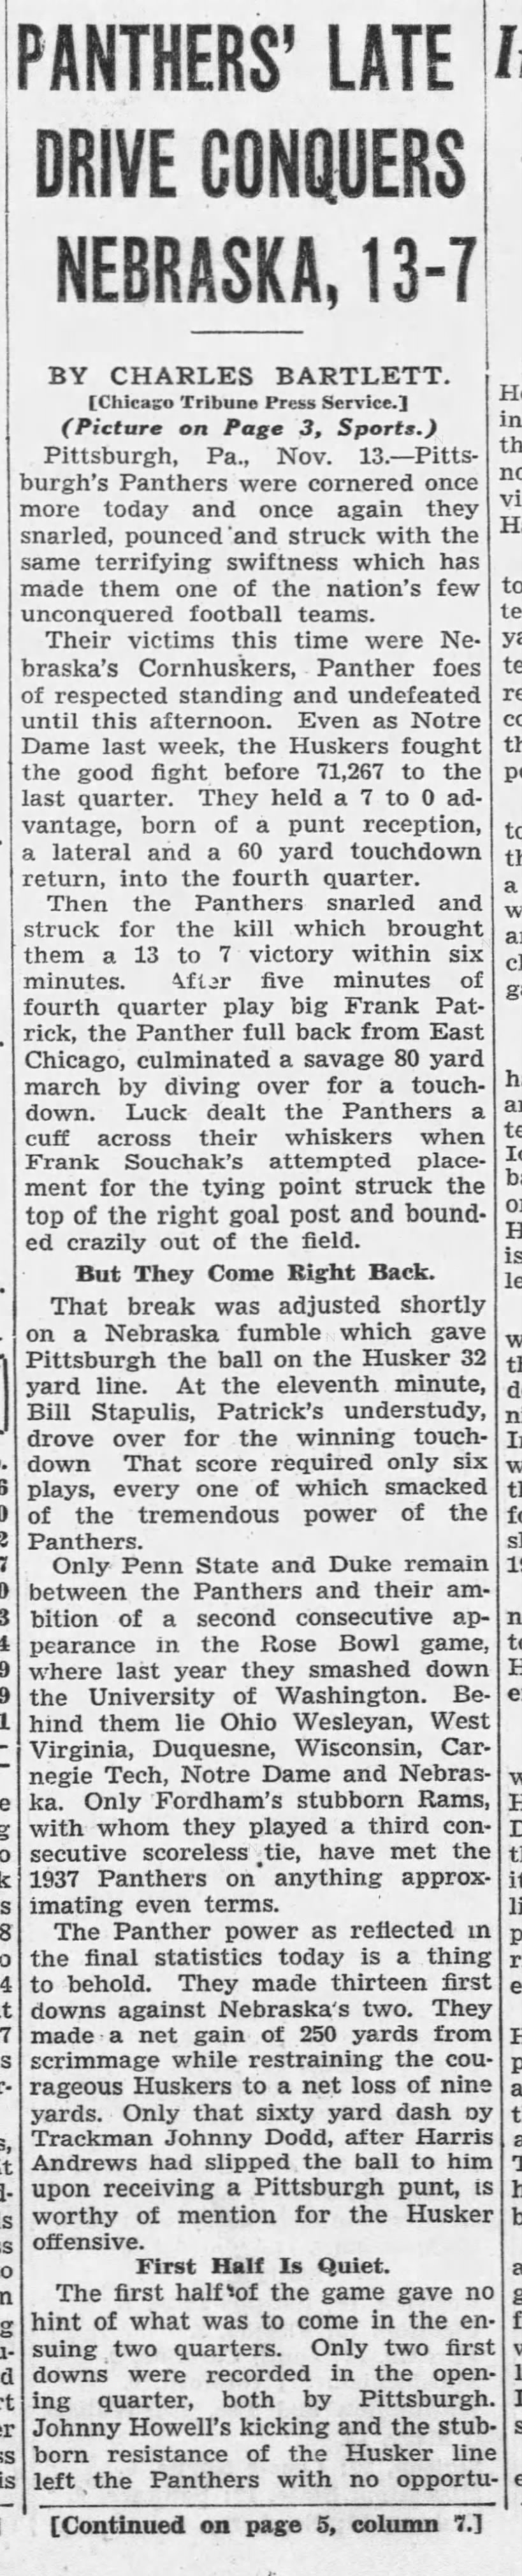 1937 Nebraska-Pittsburgh football